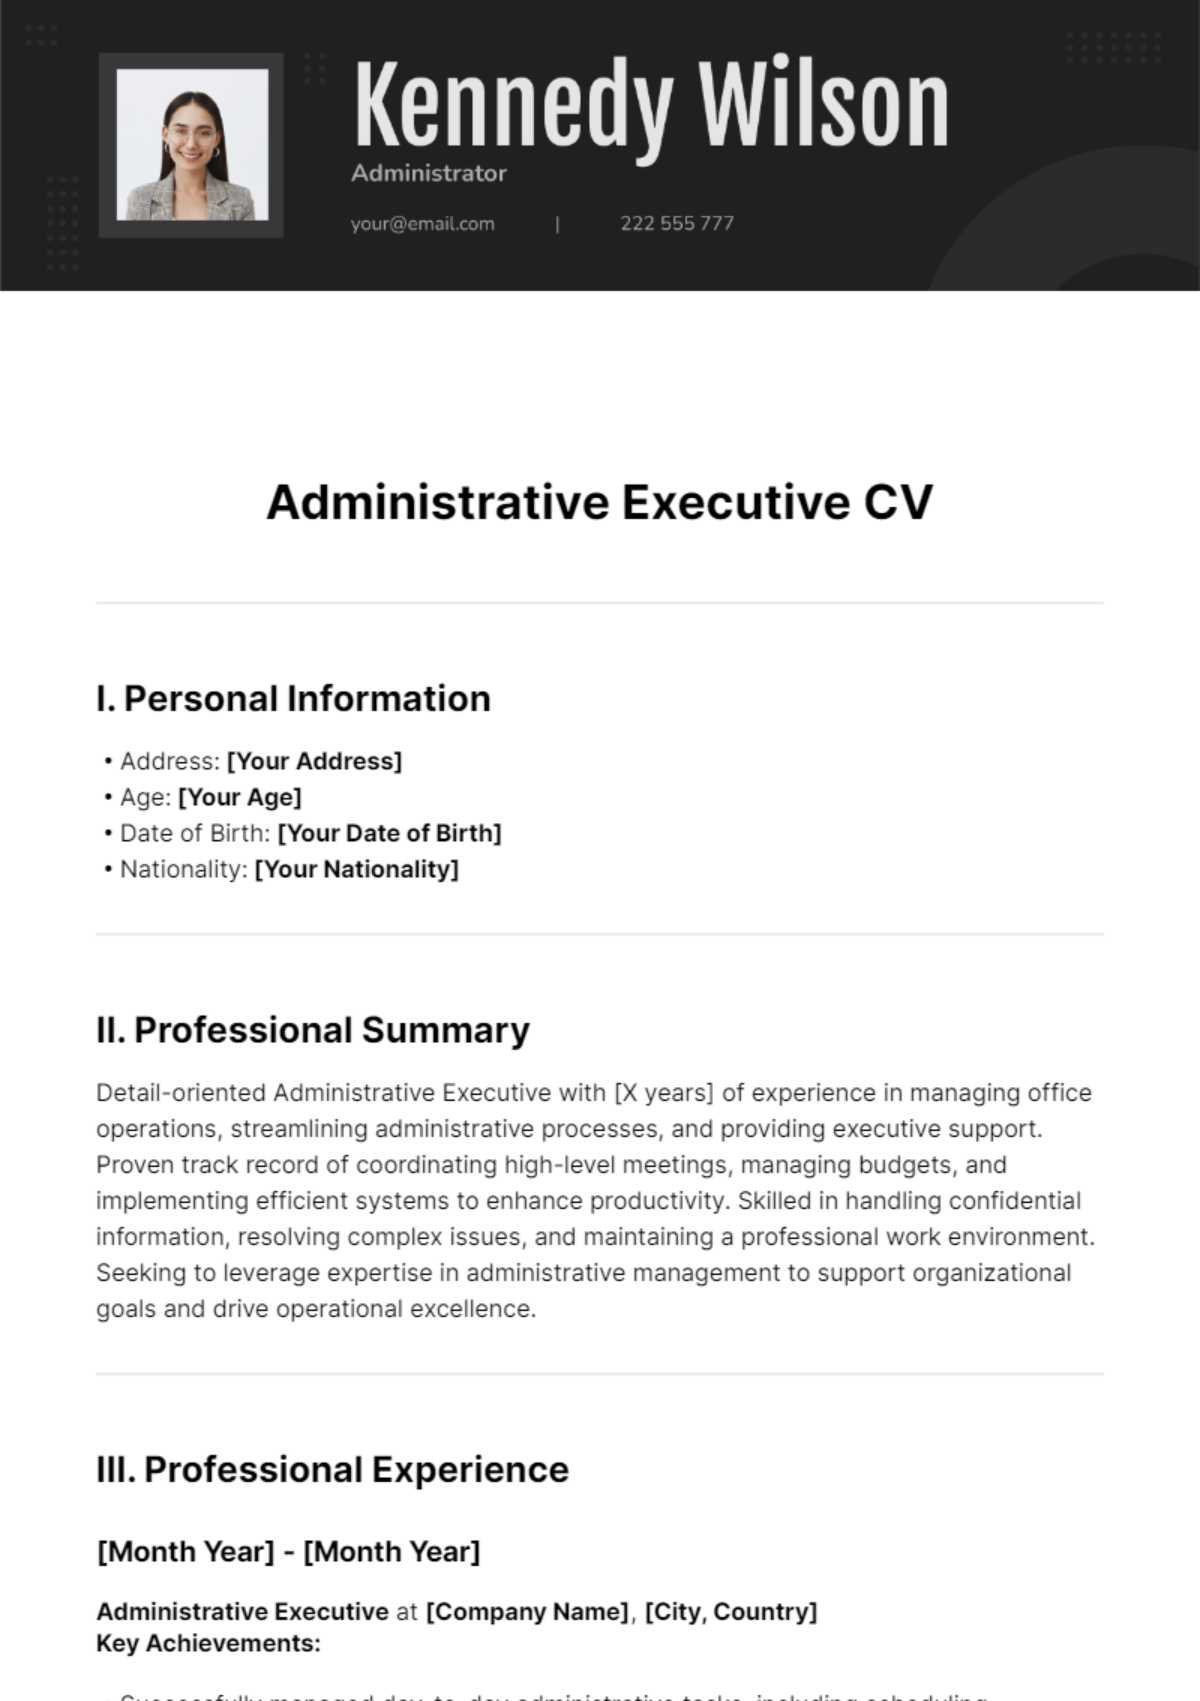 Administrative Executive CV Template